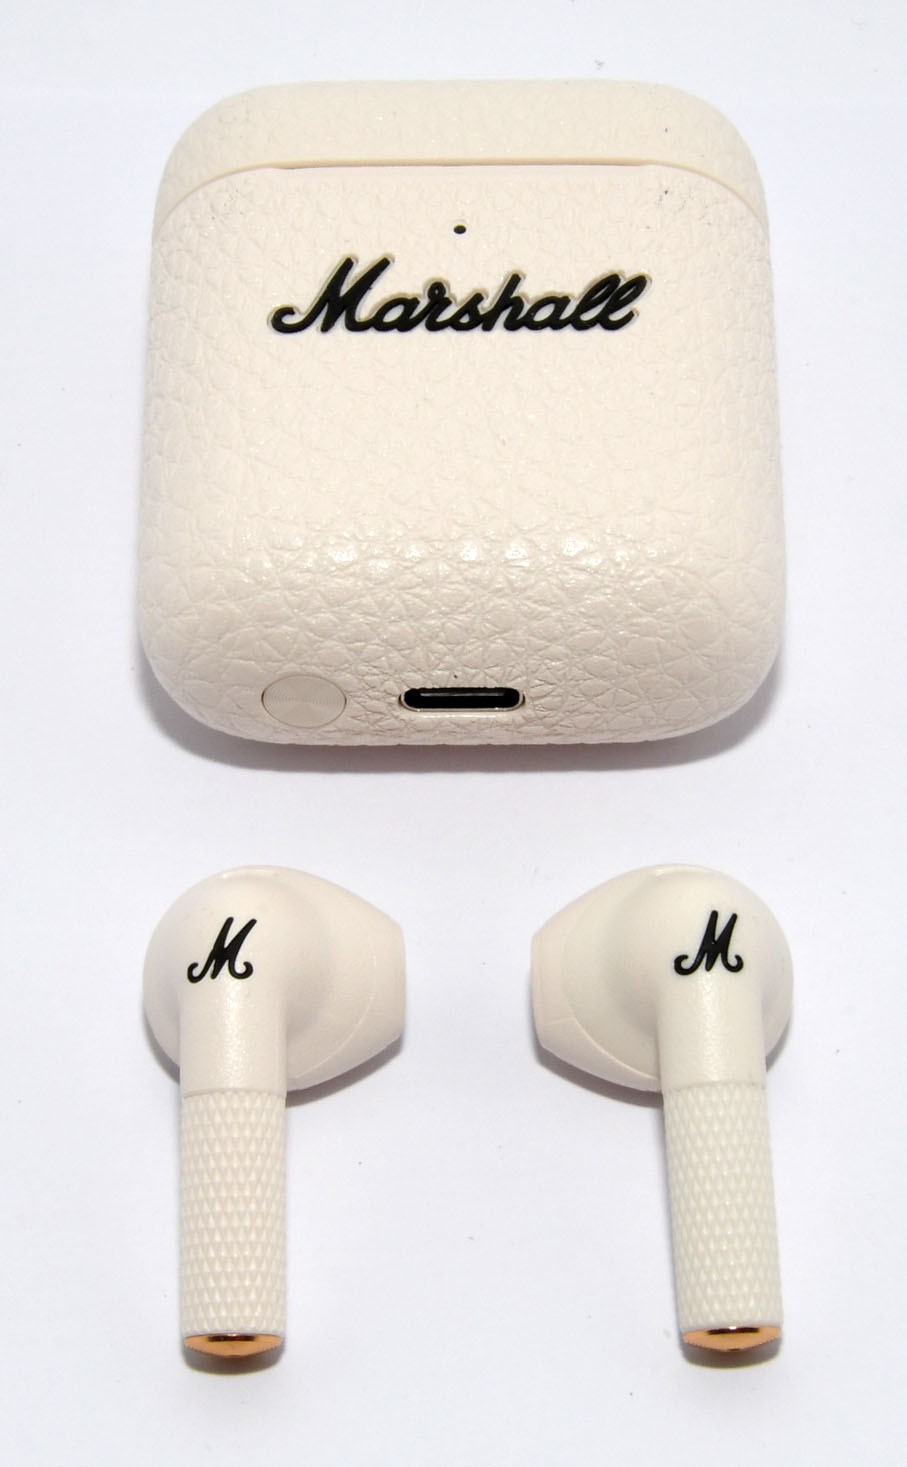 Marshall Minor III Auriculares Inalambricos In Ear - Negro